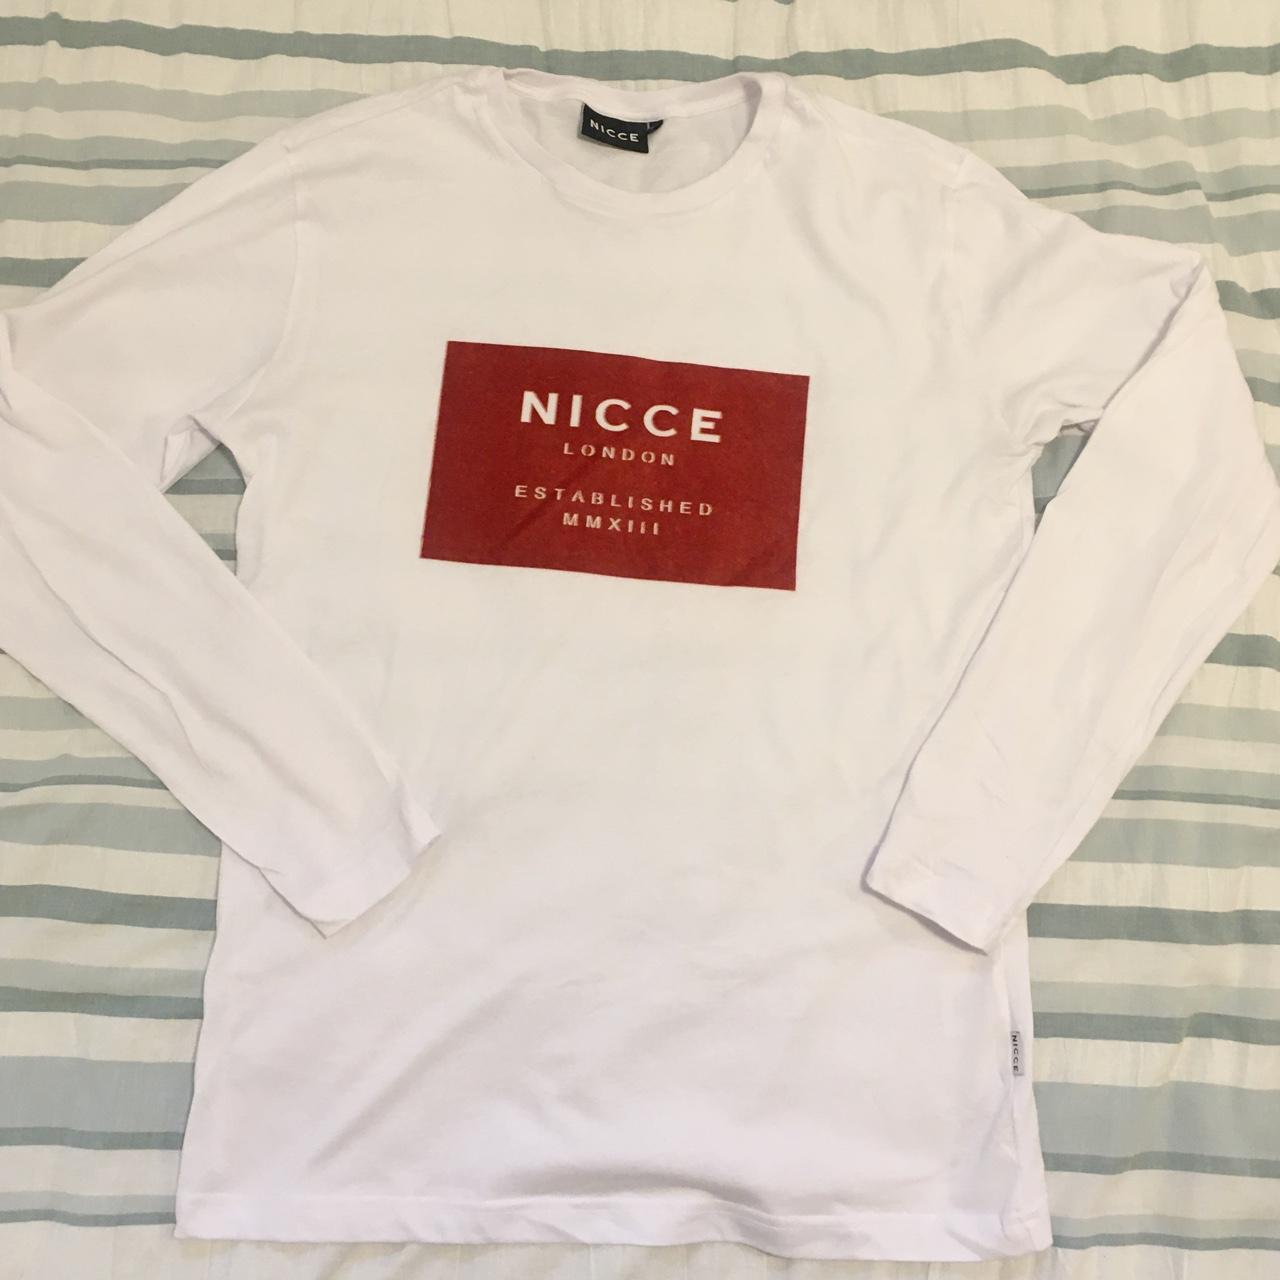 NICCE Men's White and Orange T-shirt